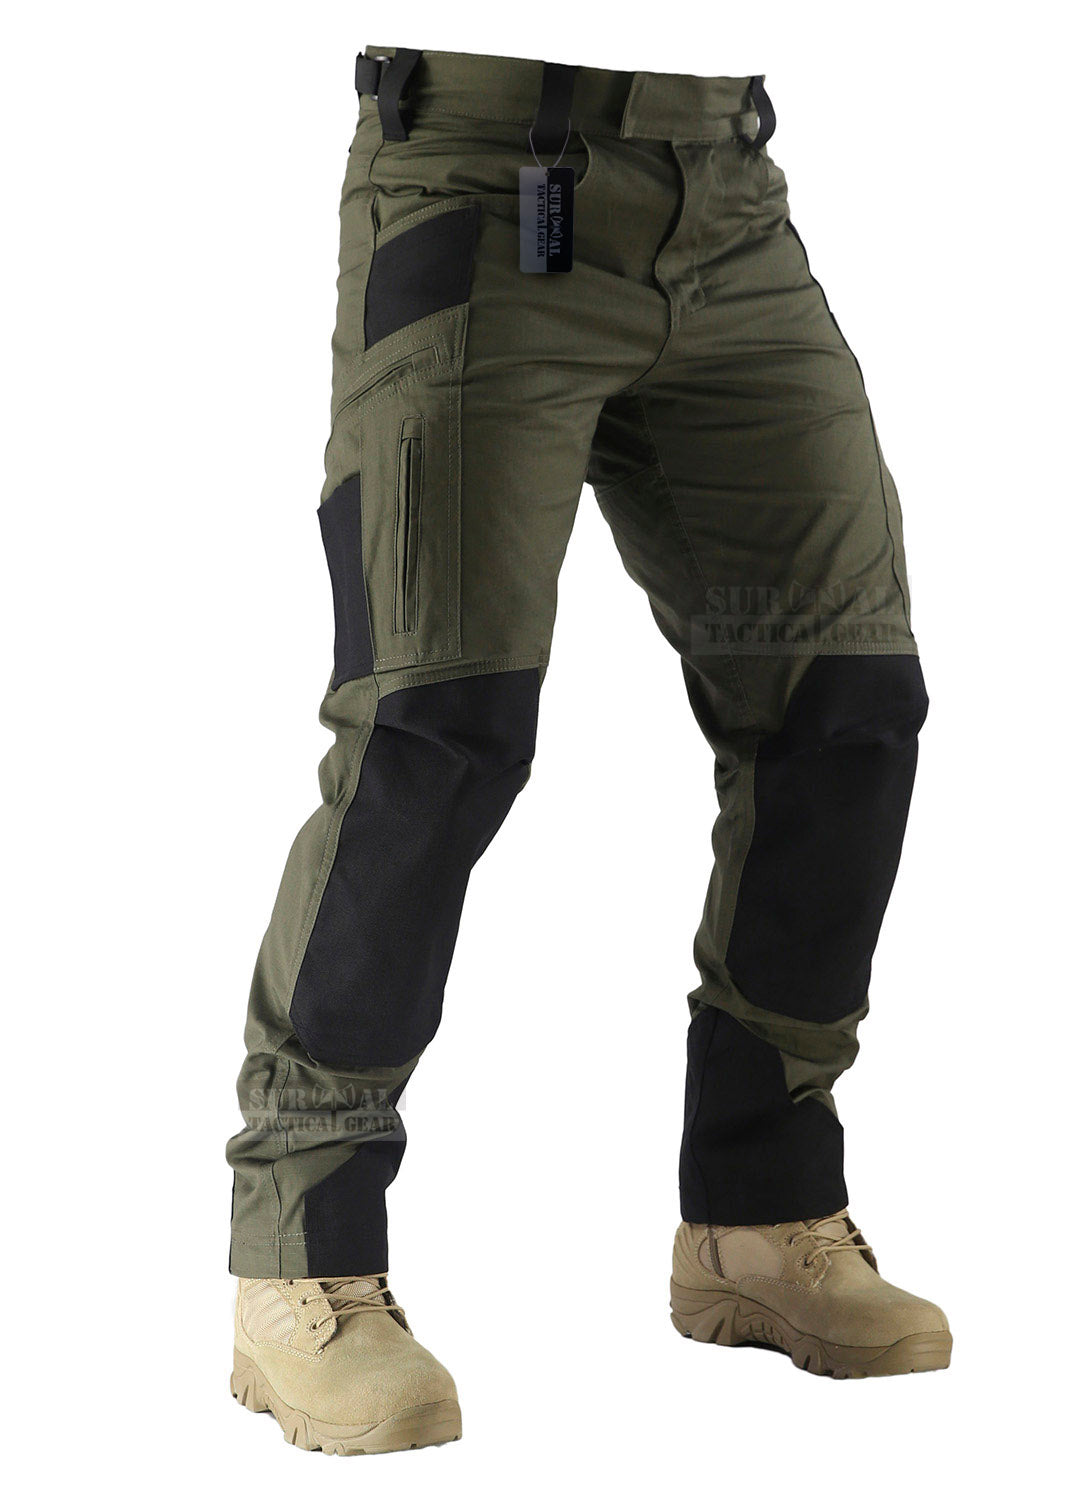 Men’s Ripstop Pants Outdoor Military Camo Cargo Trousers